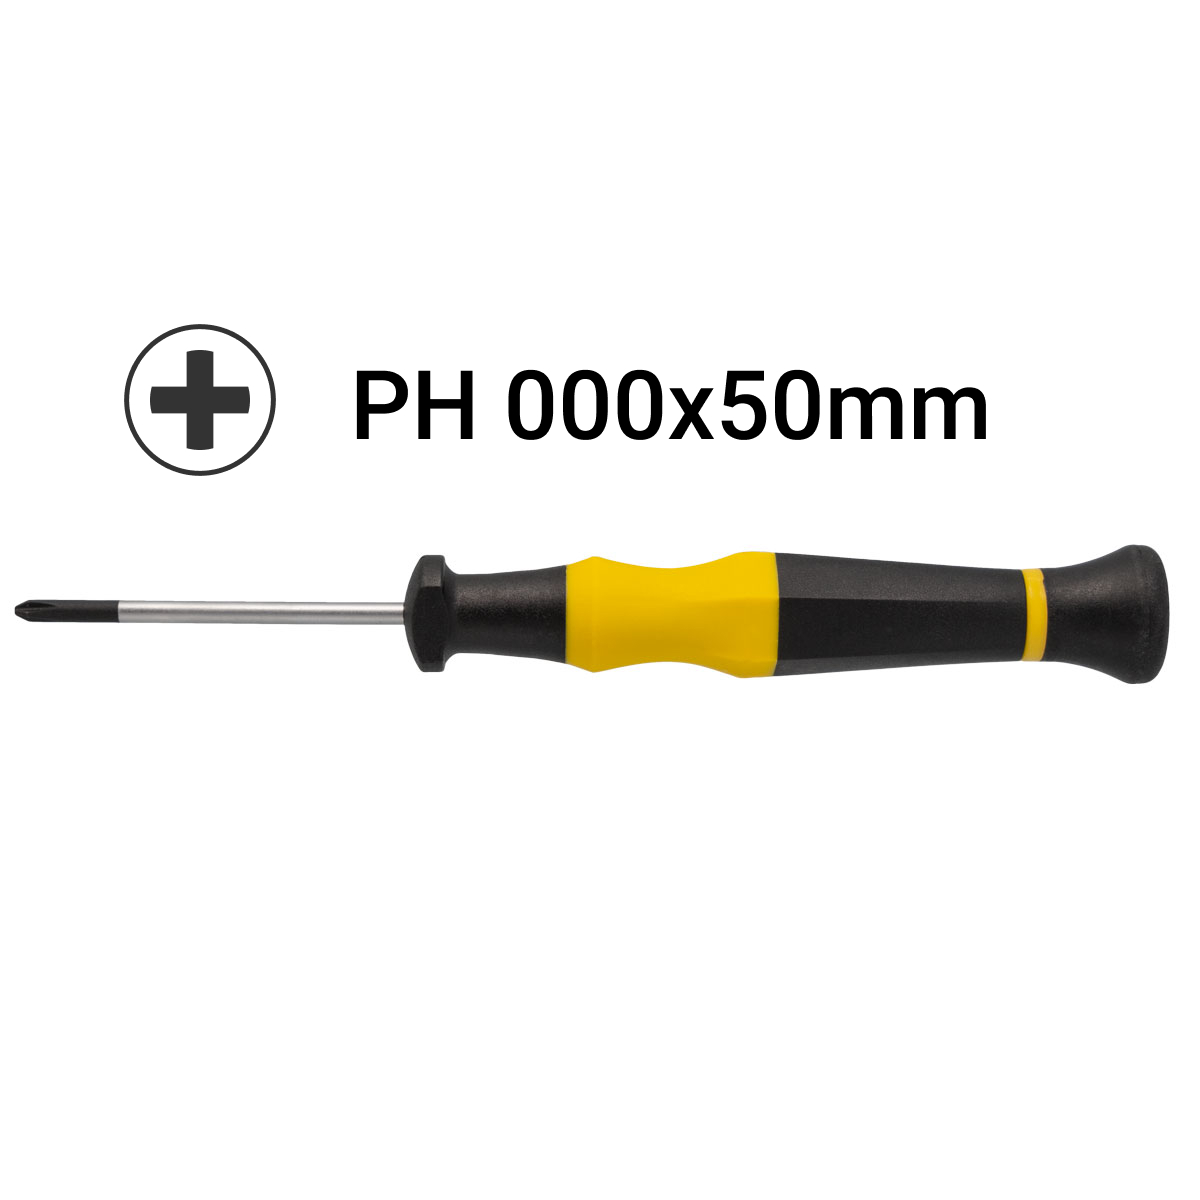 Precision Screwdriver Philips PH000x50mm